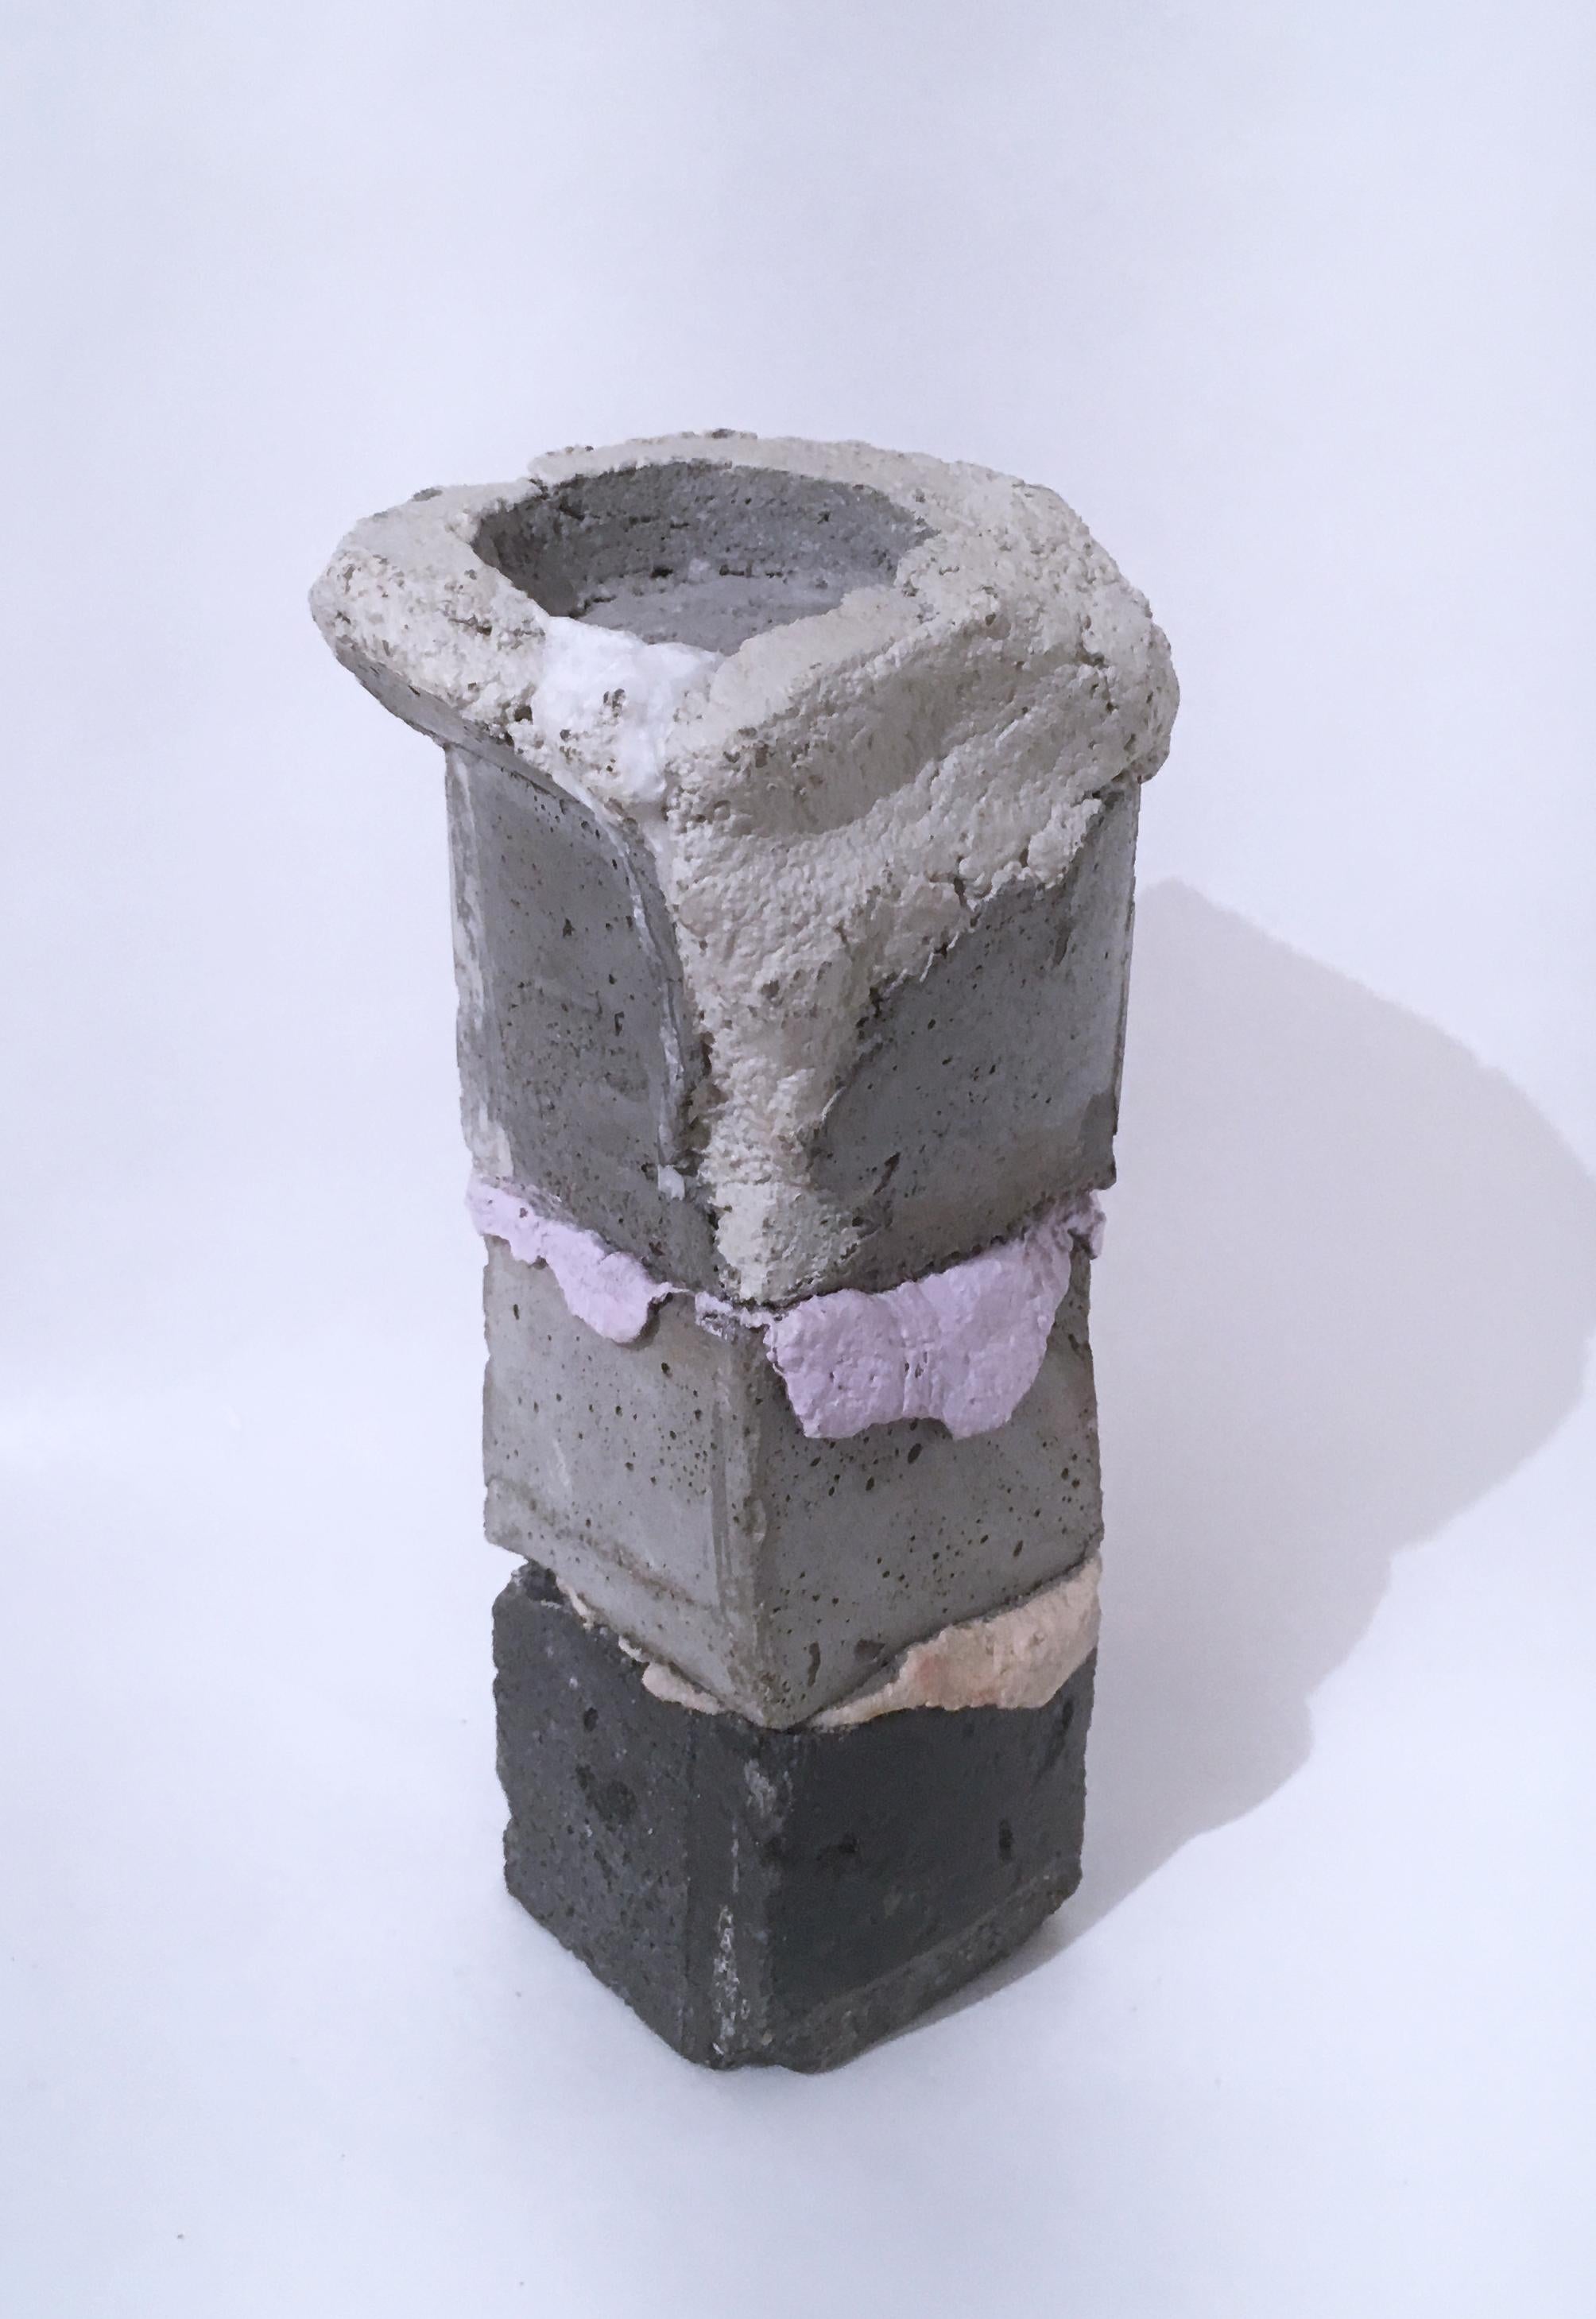 Layered Cube Votive Sculpture, pink, grey, black concrete votive candle holder